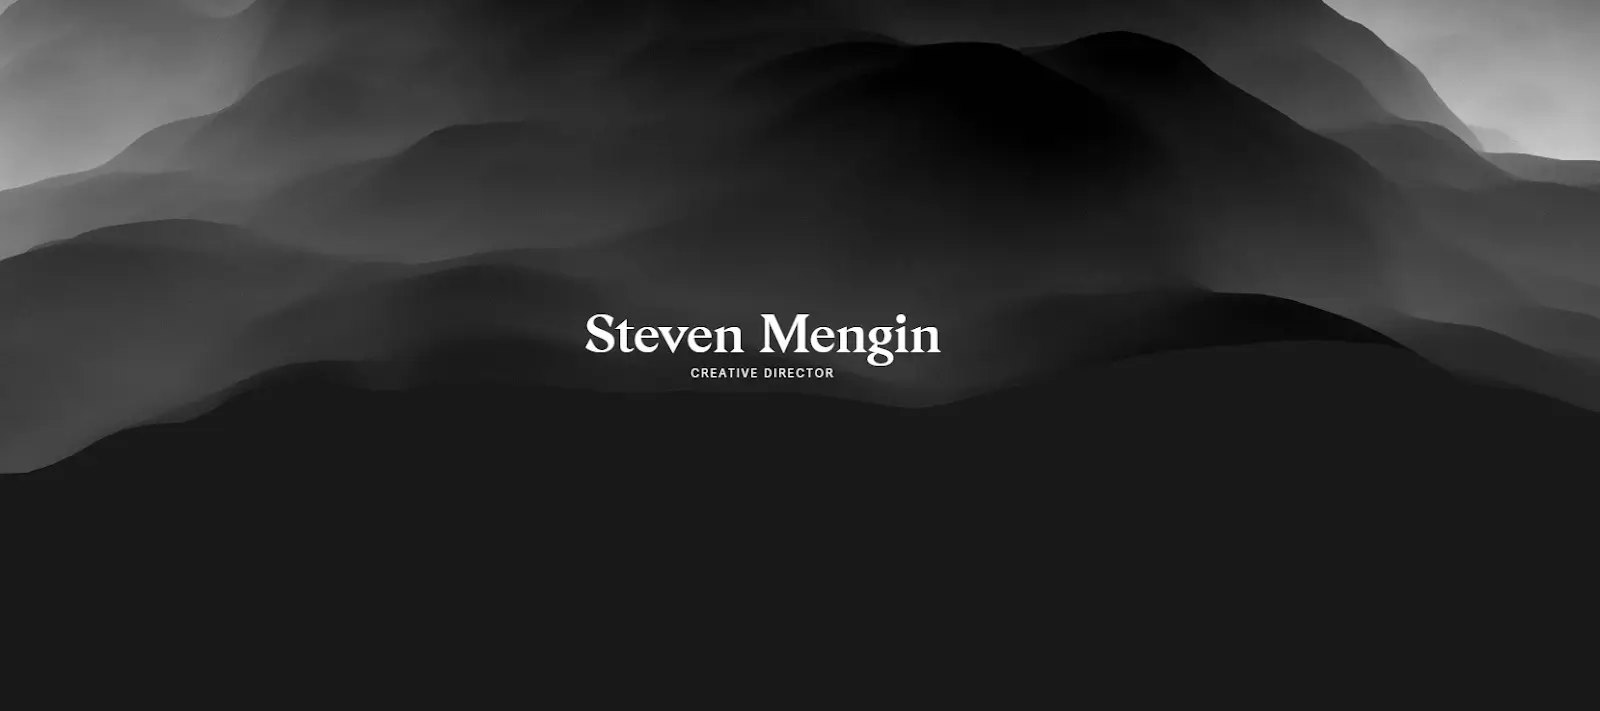 Portafolio de desarrollador front-end de Steven Mengin